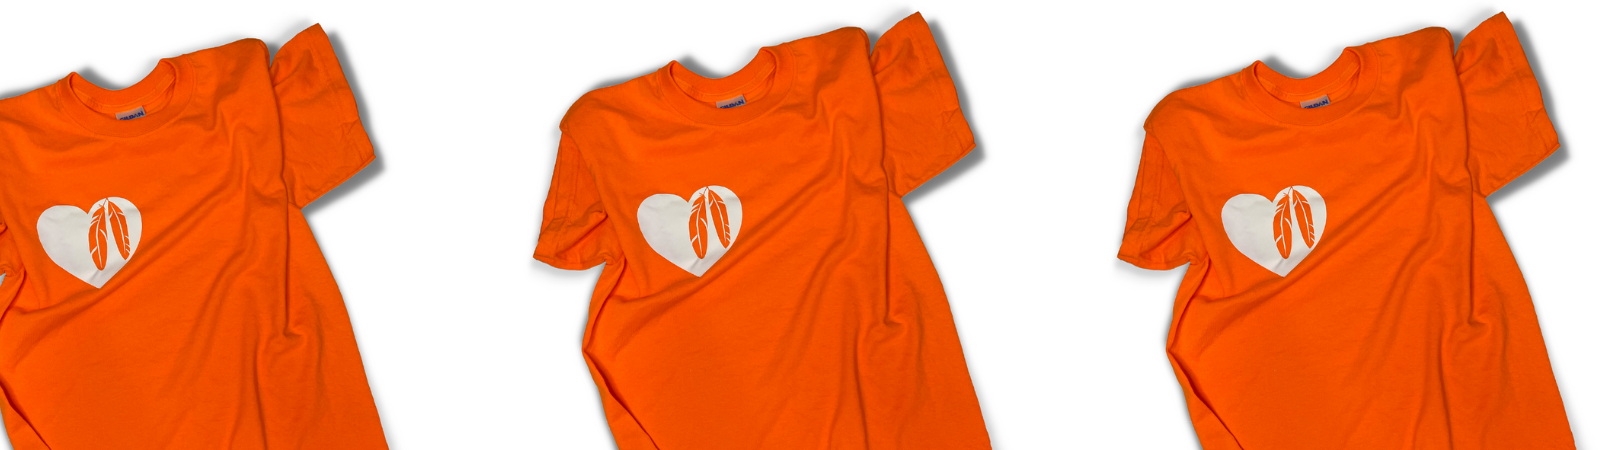 three every child matters orange shirts